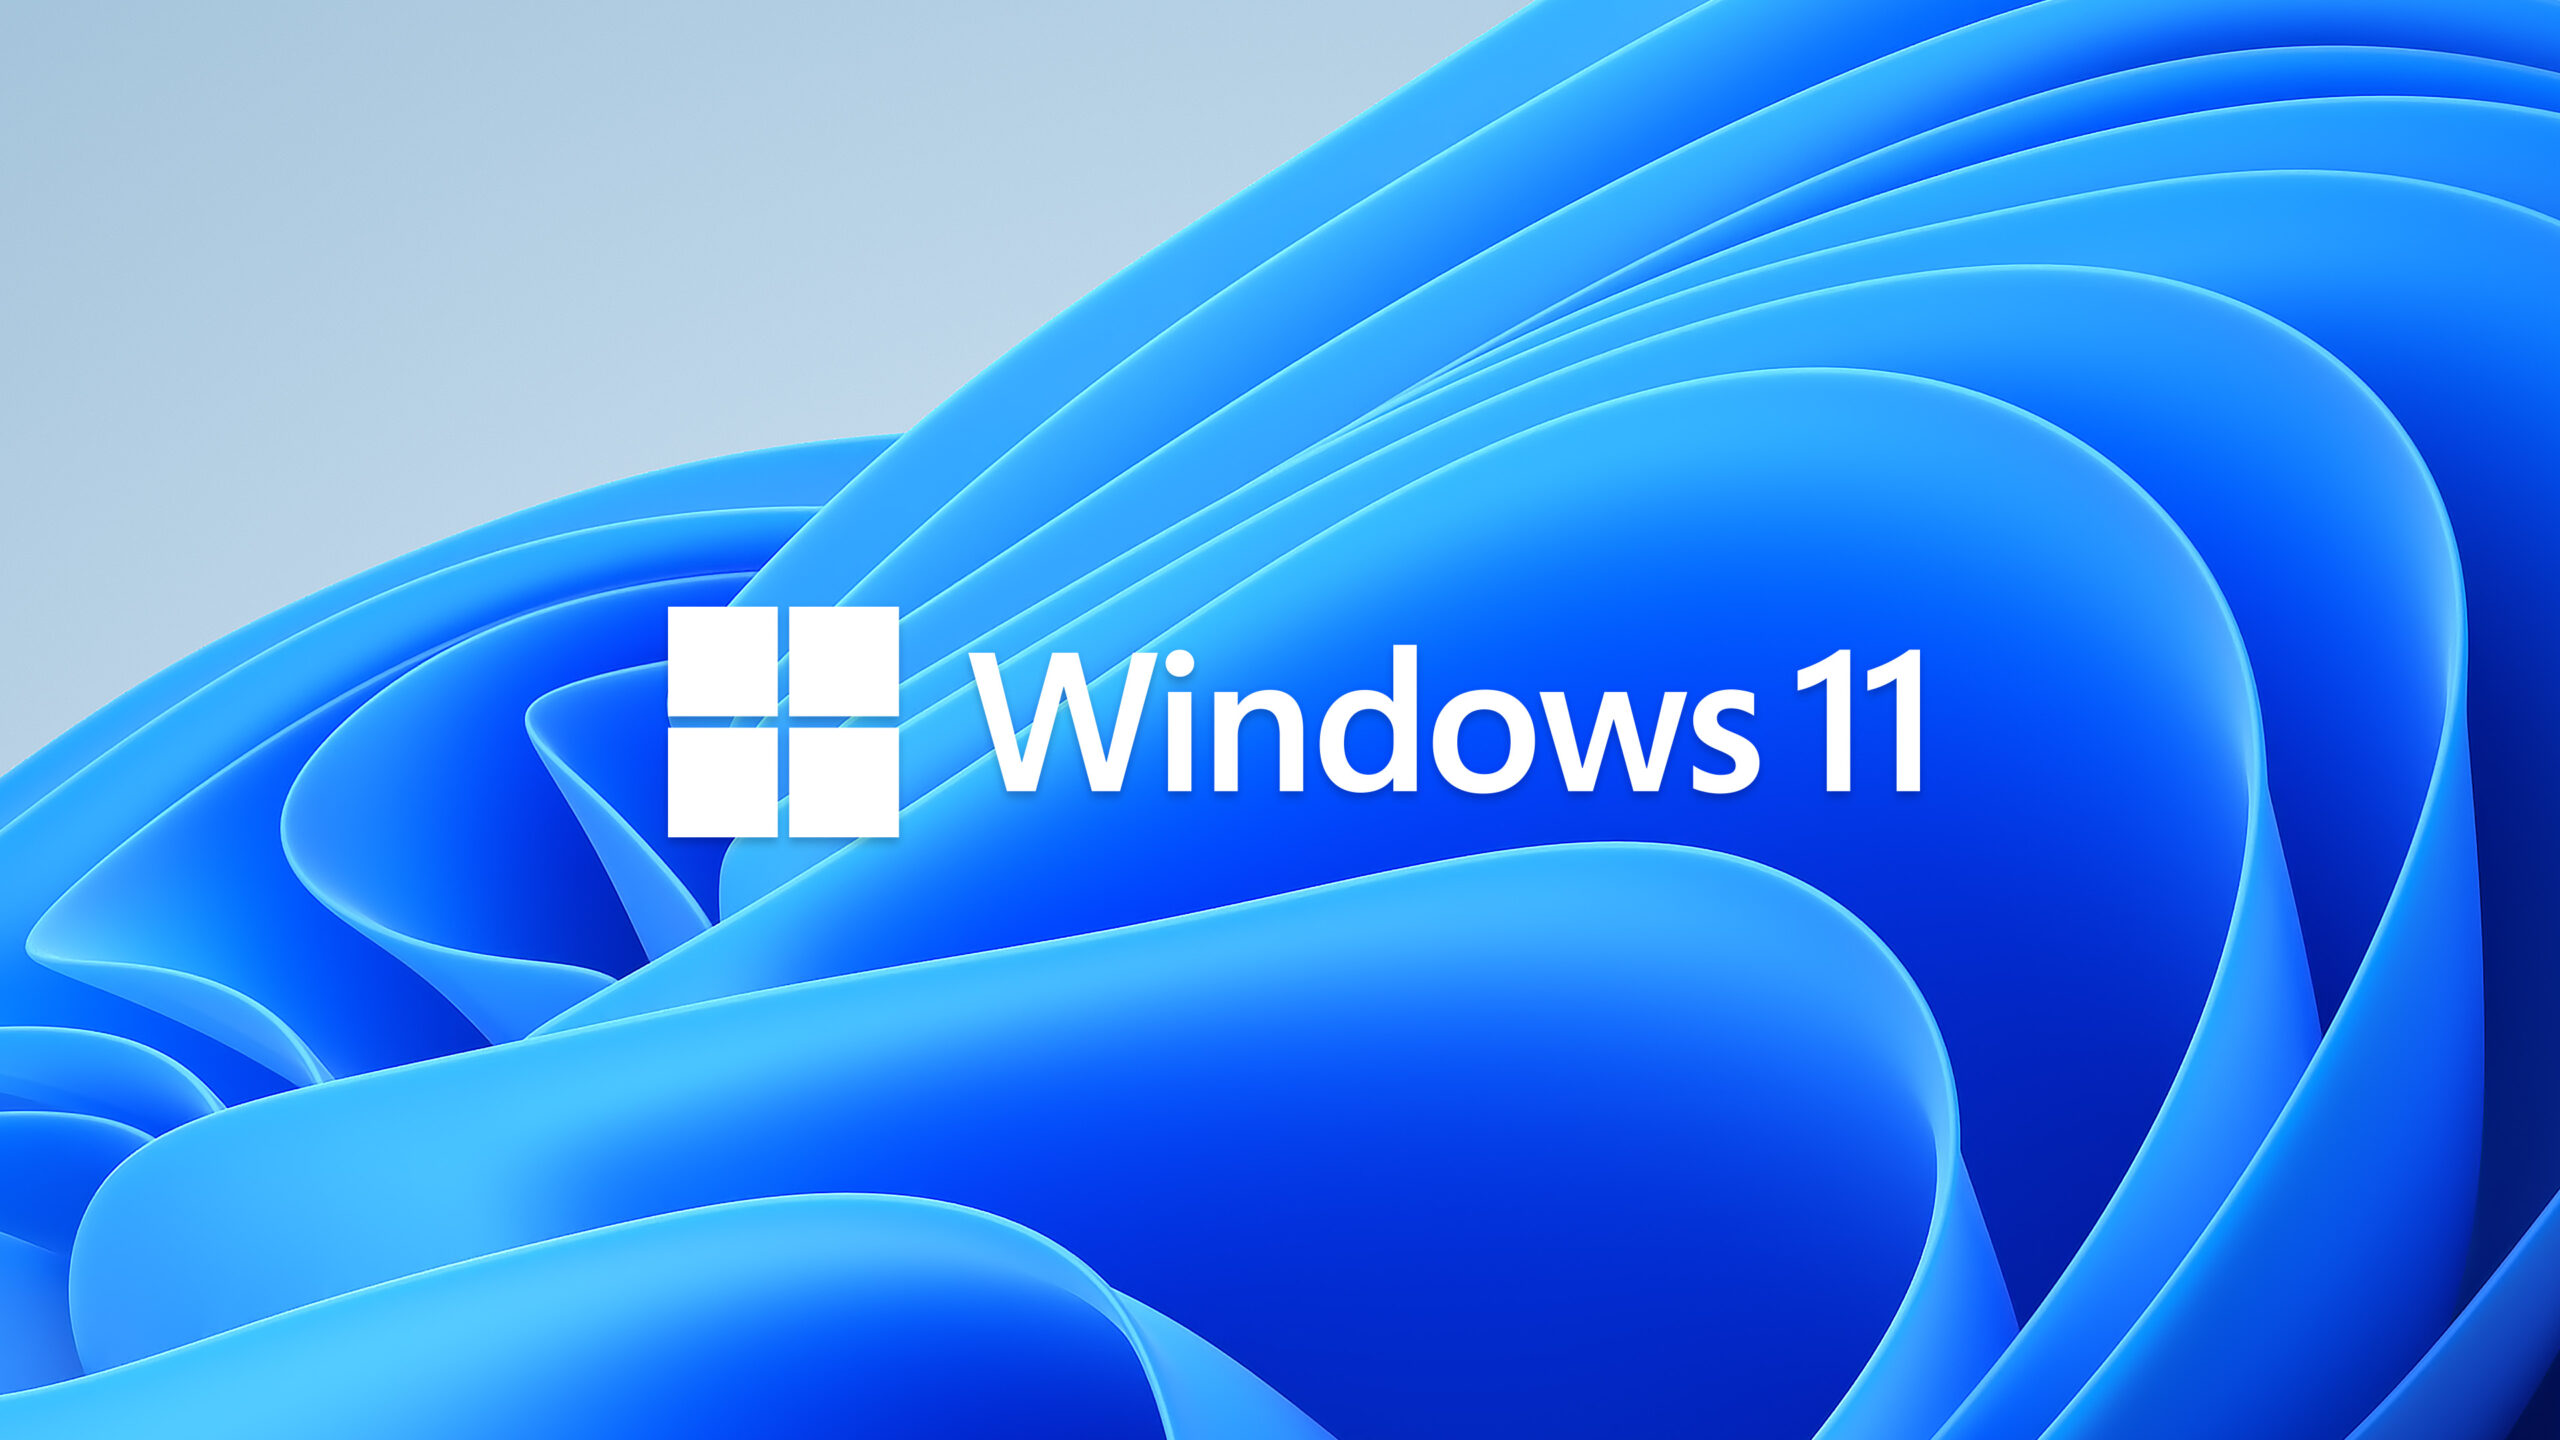 Windows 11 scaled